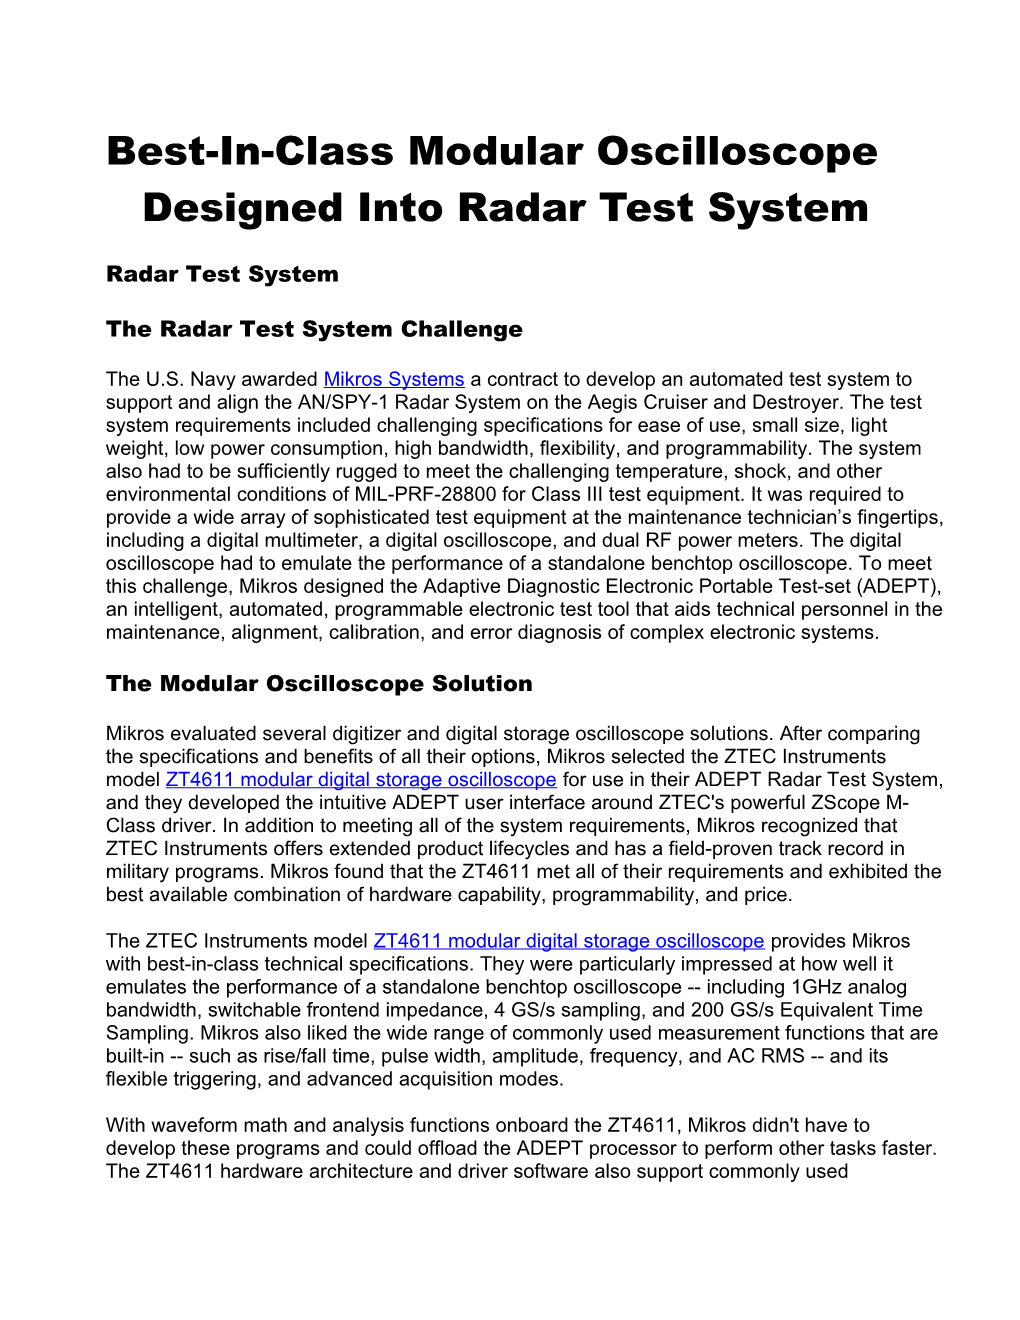 Best-In-Class Modular Oscilloscope Designed Into Radar Test System